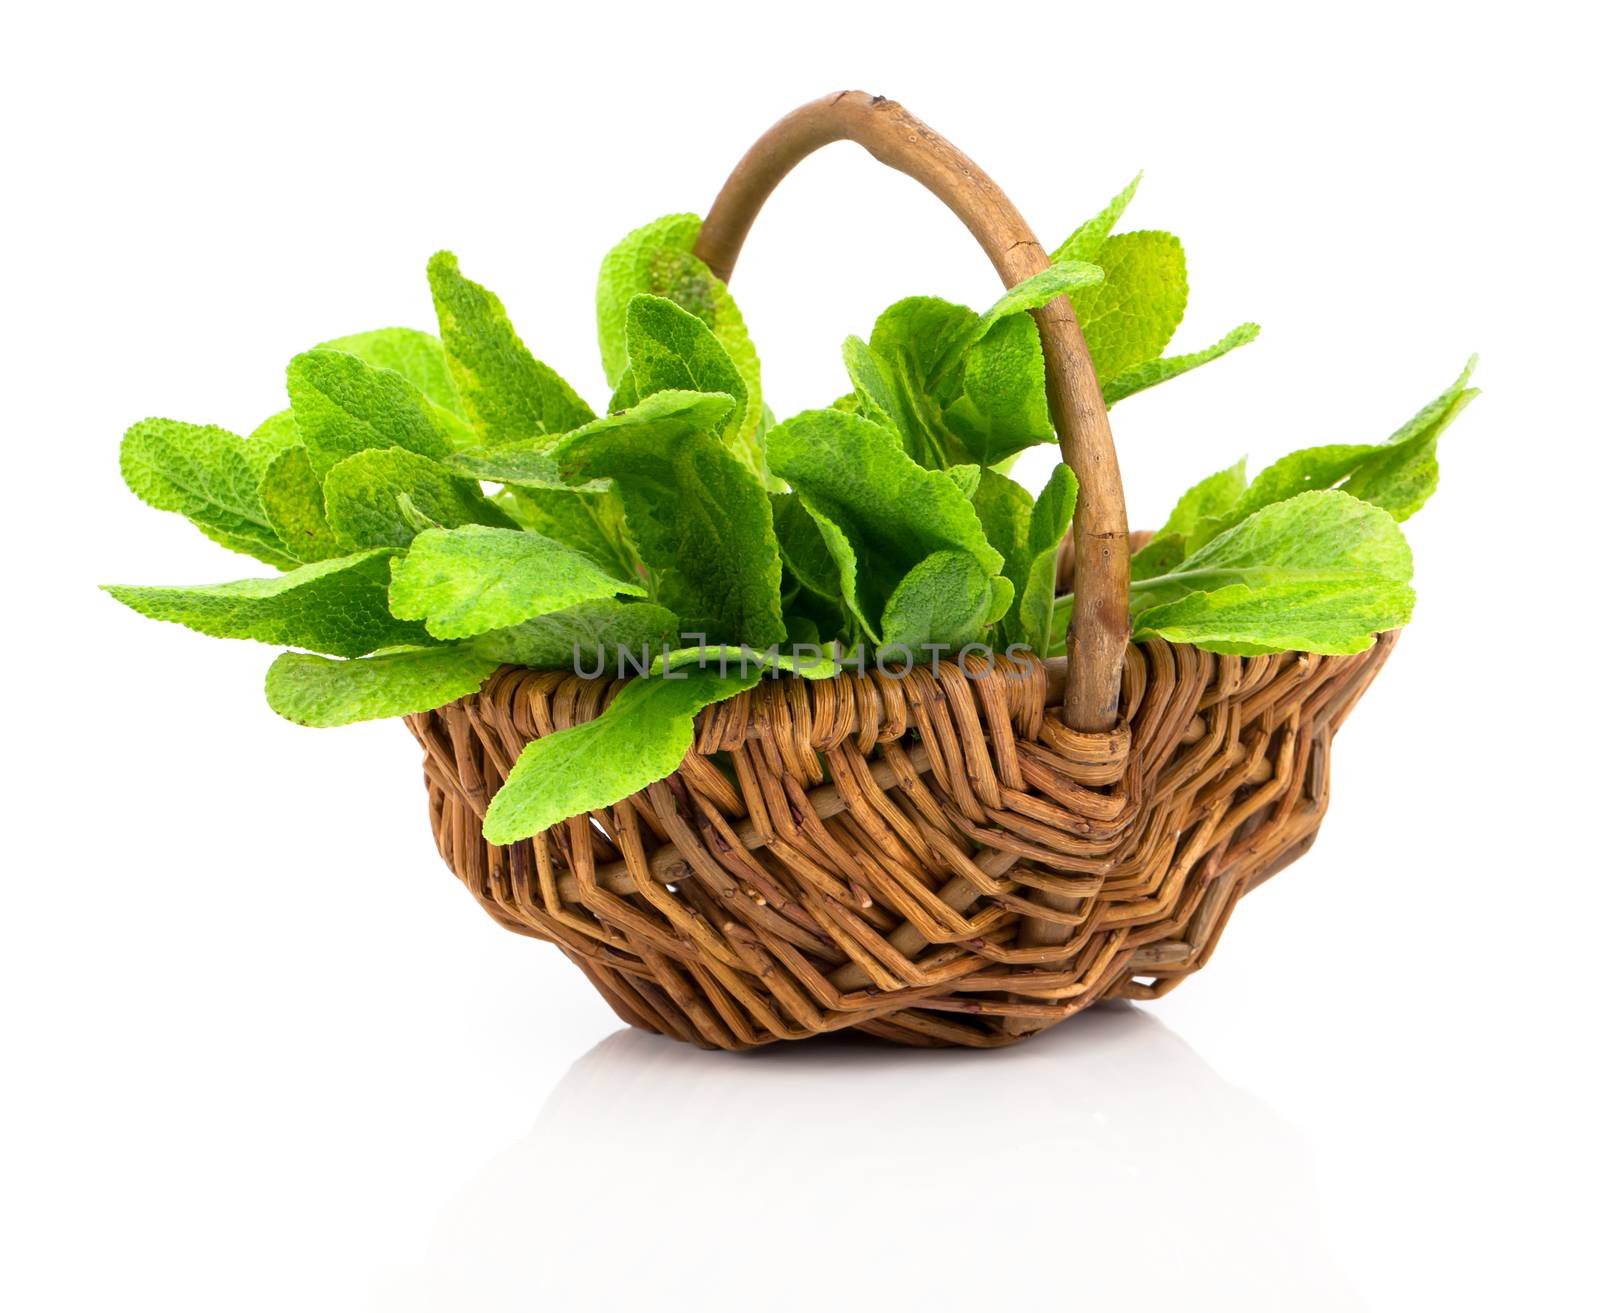 Bundle of fresh sage in a wicker basket, on a white background by motorolka